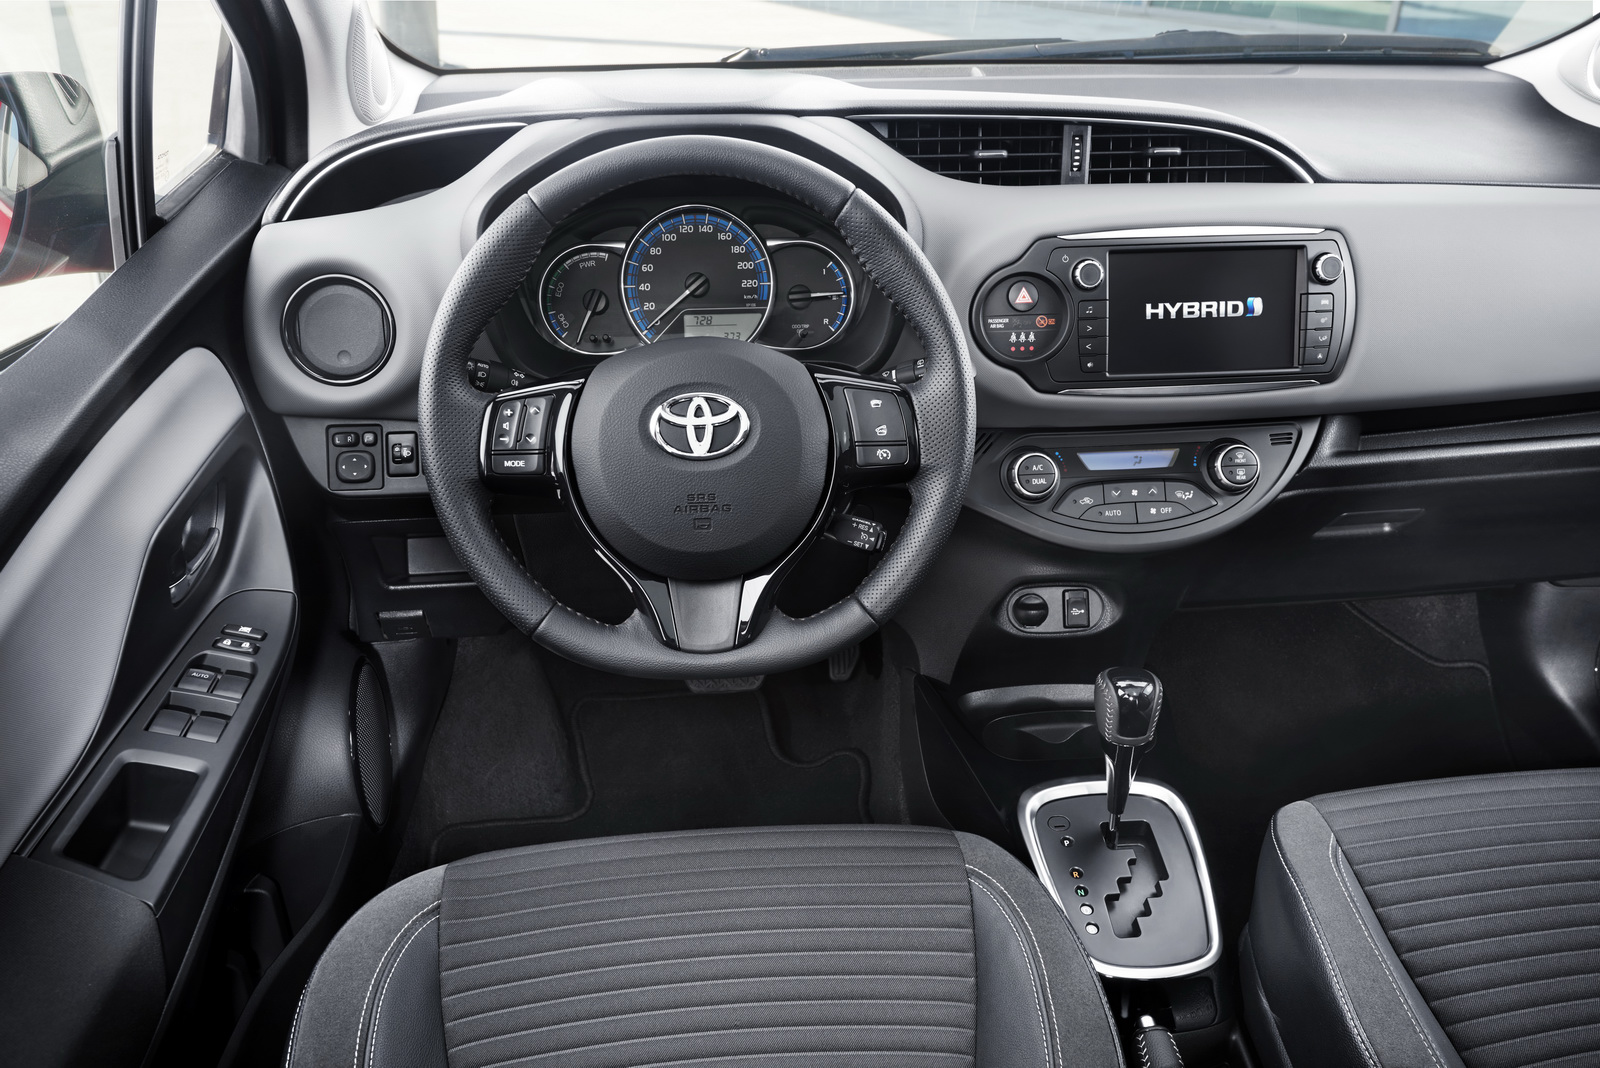 Toyota Yaris HD wallpapers, Desktop wallpaper - most viewed